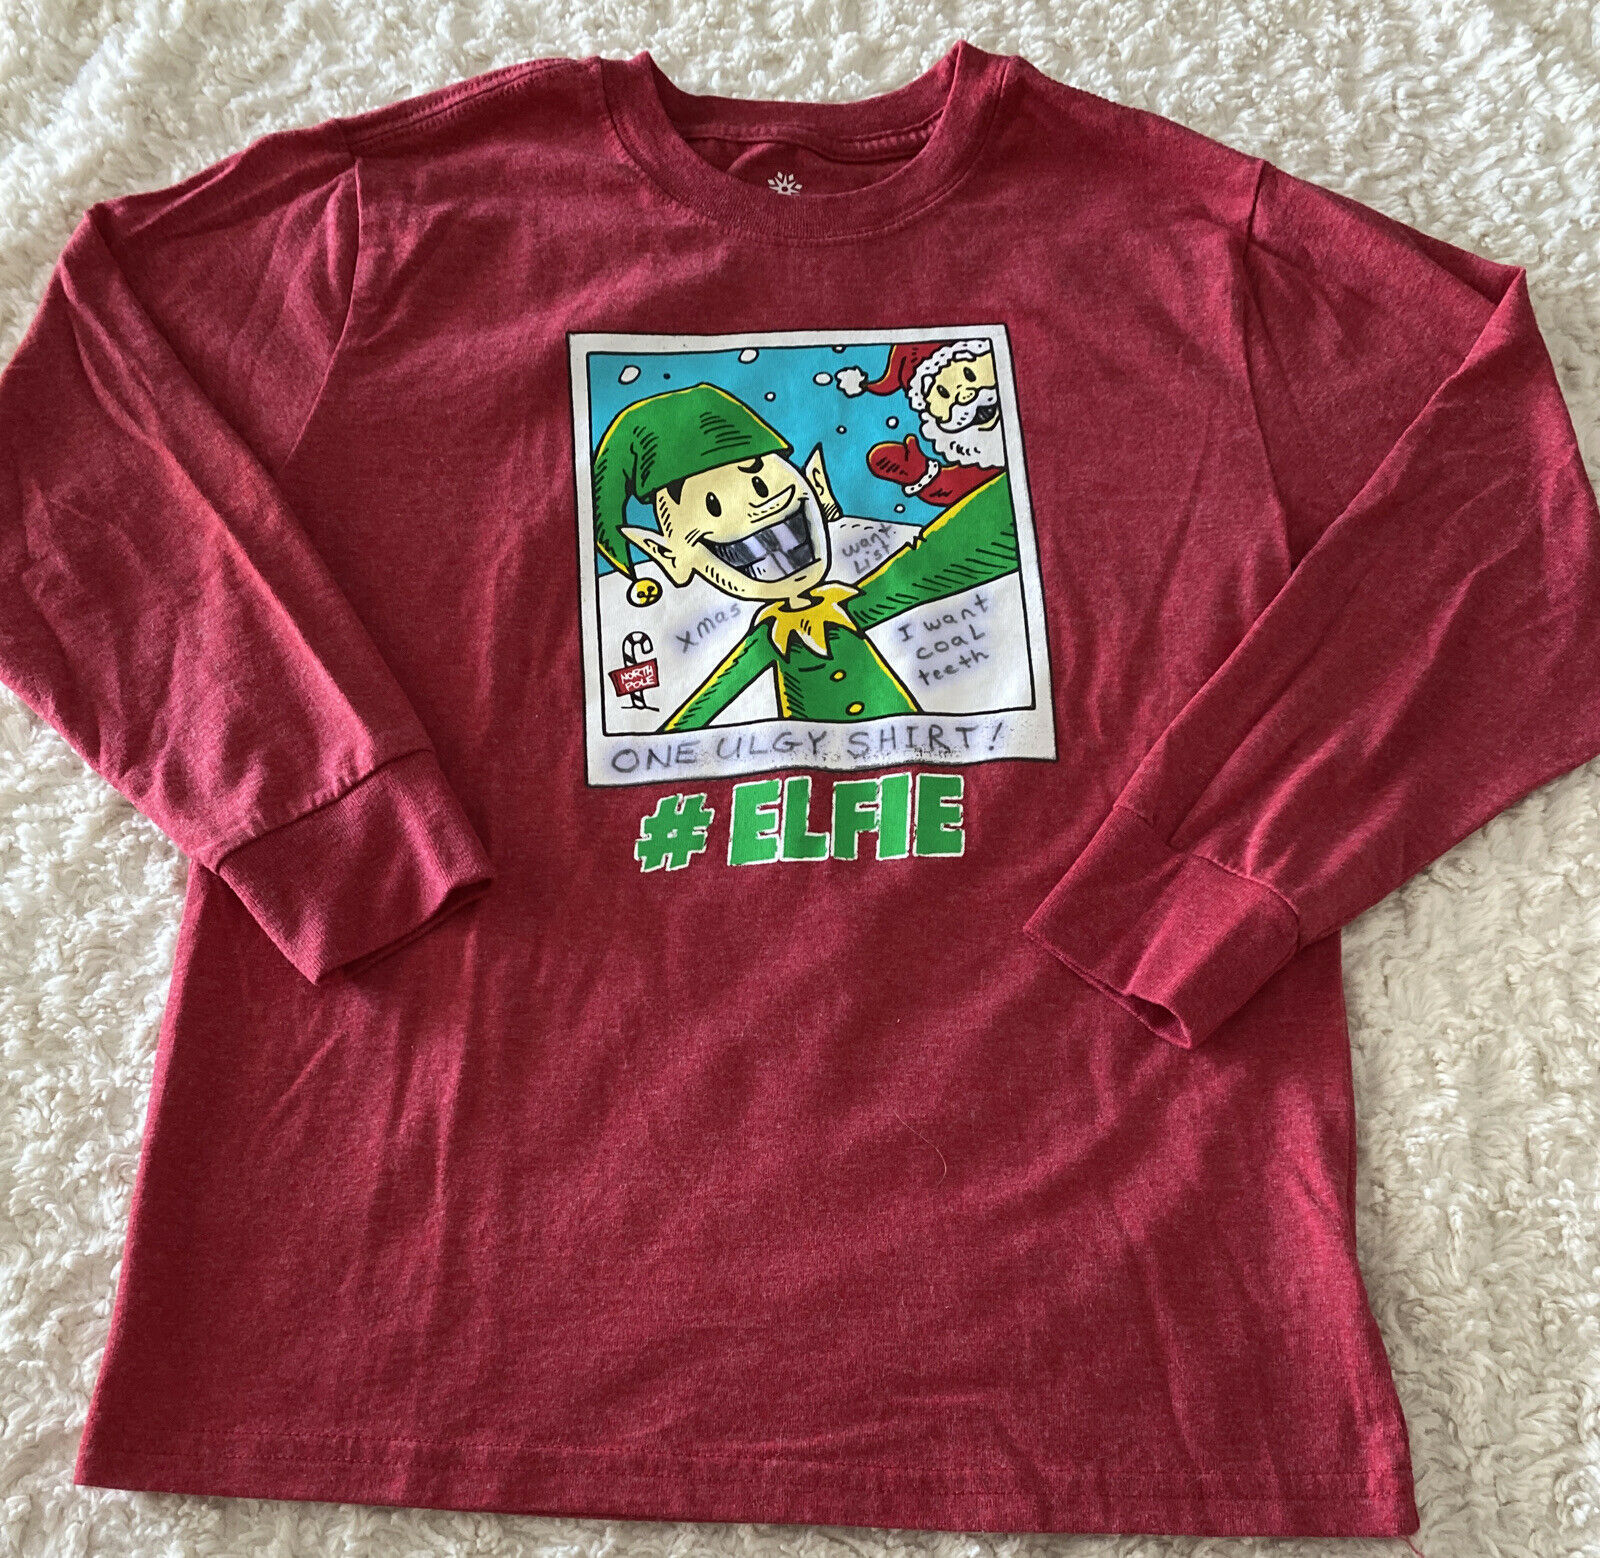 Target Boys Red Green #Elfie Santa One Ugly Shirt Polaroid Long Sleeve Shirt 8 - $9.31